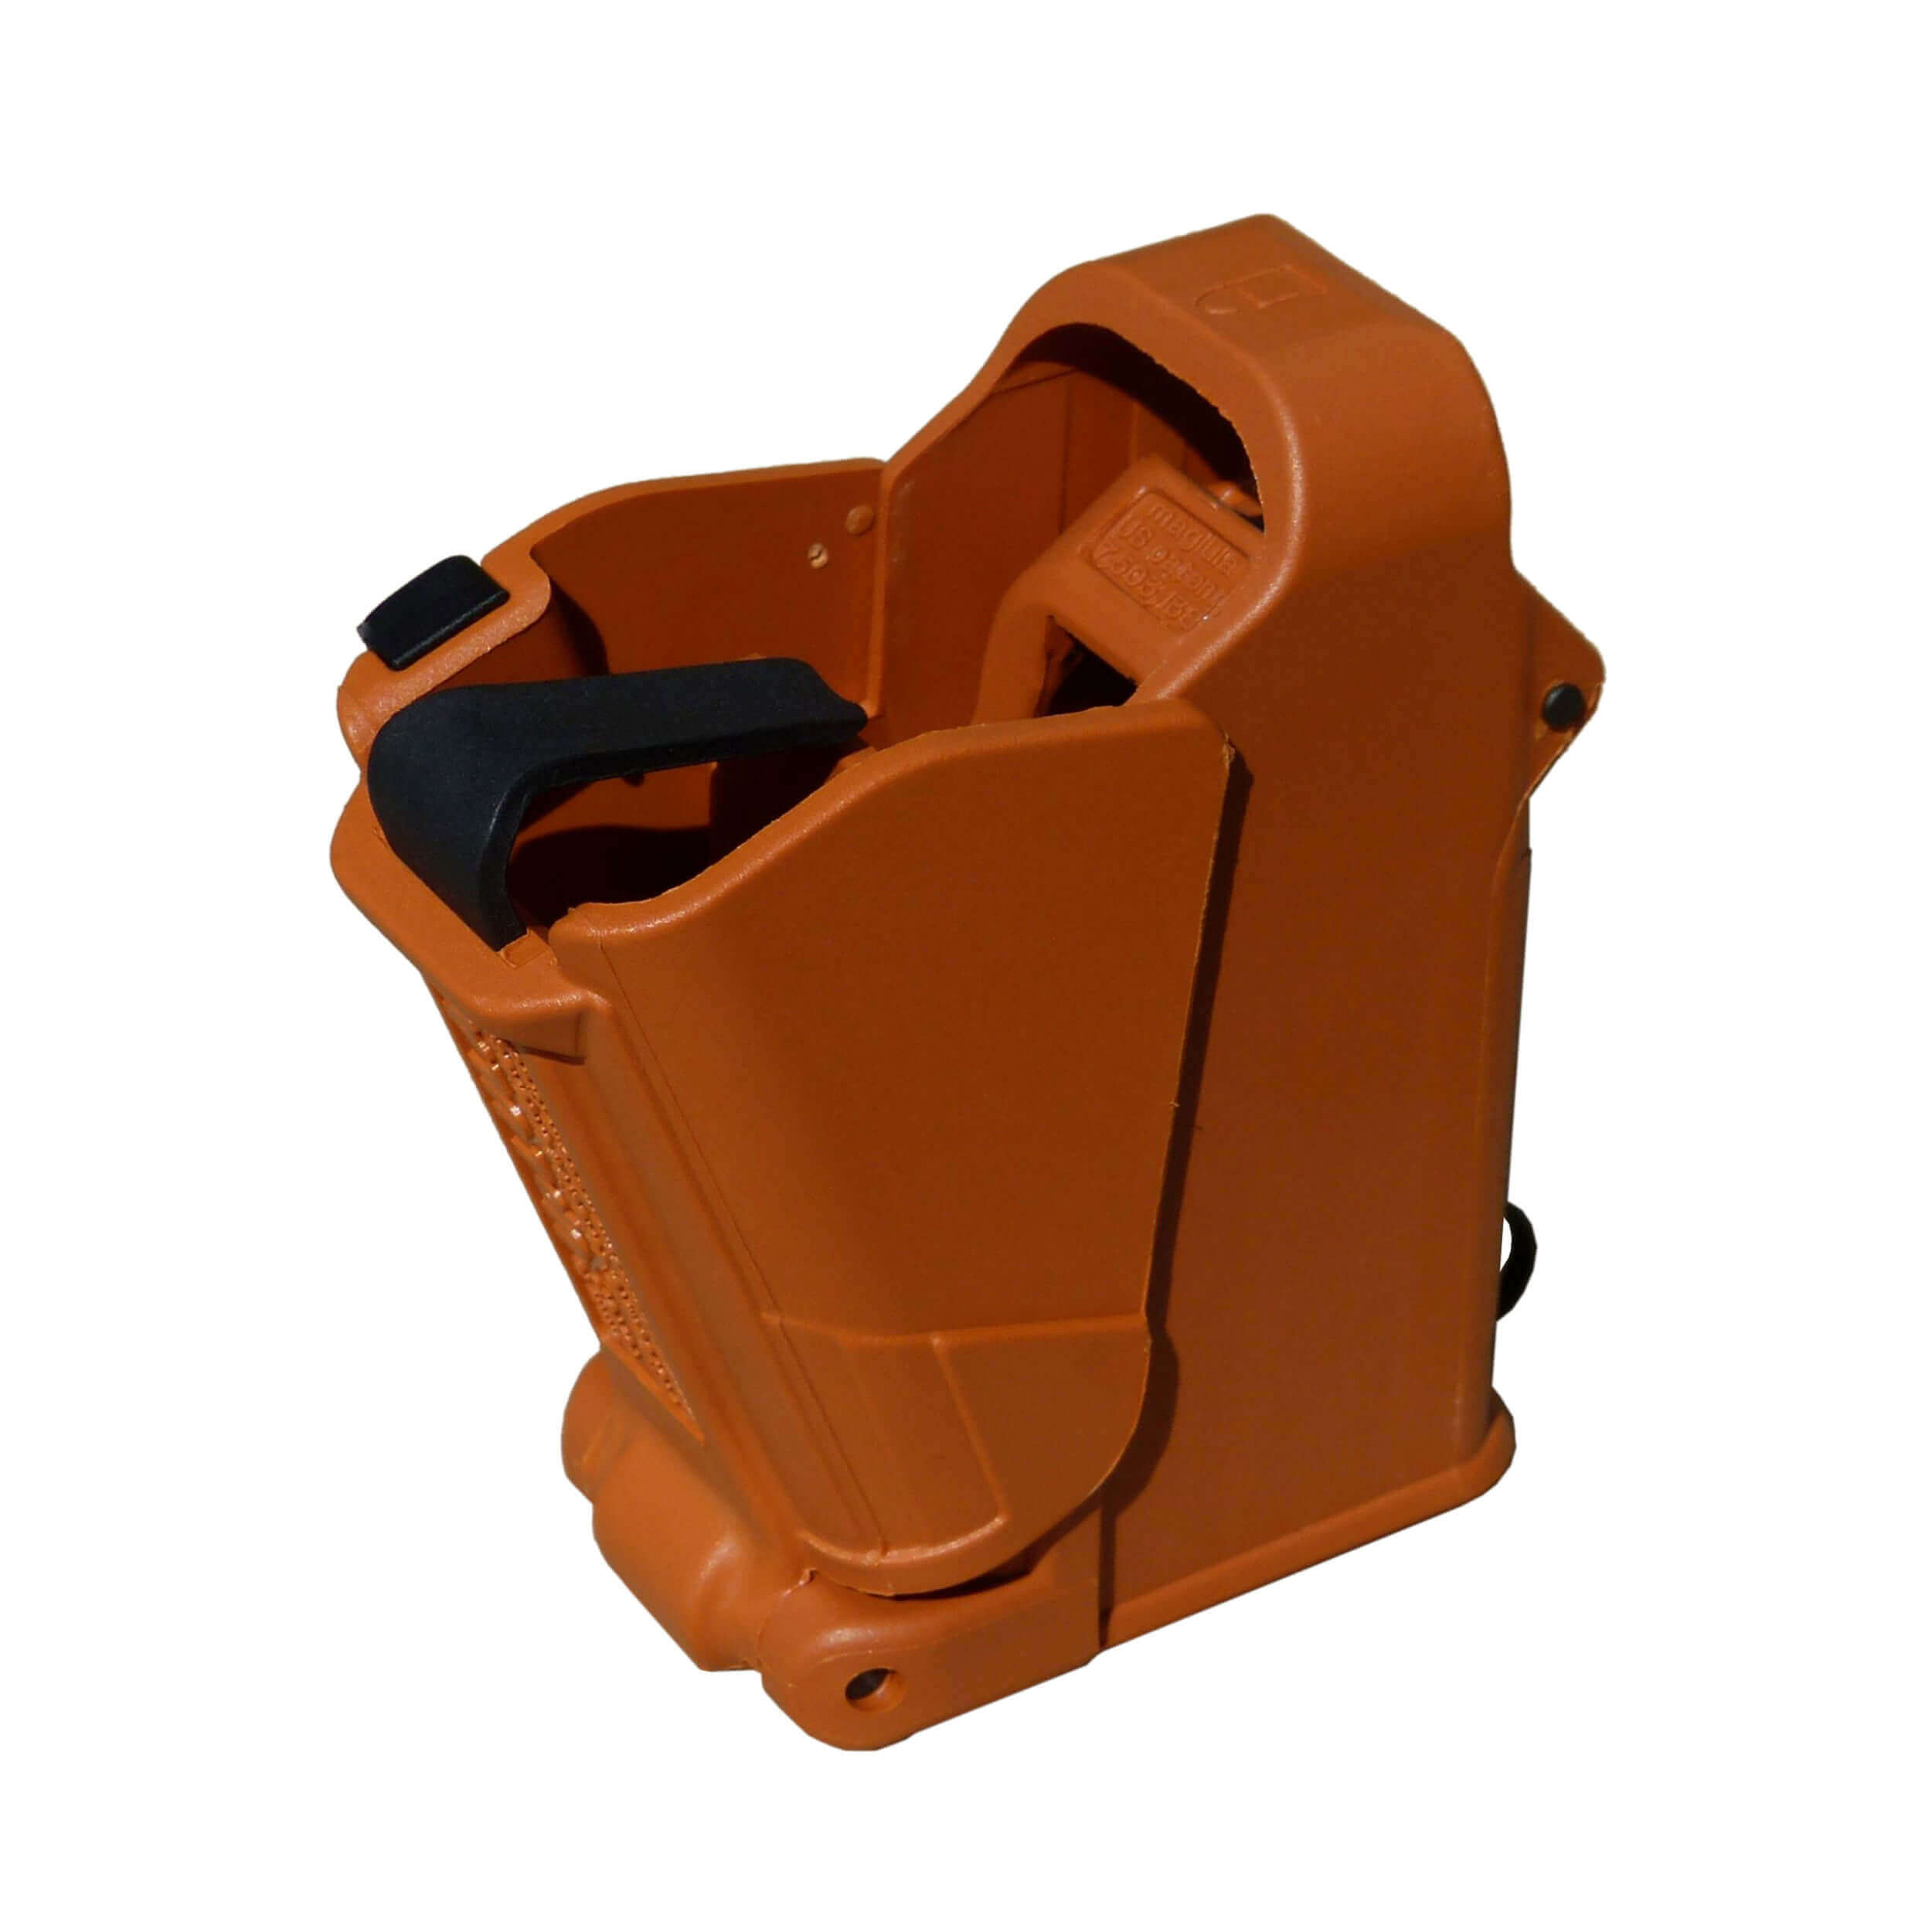 maglula® UpLULA®  9 mm to .45ACP universal pistol magazine loader – Brown Orange UP60BO